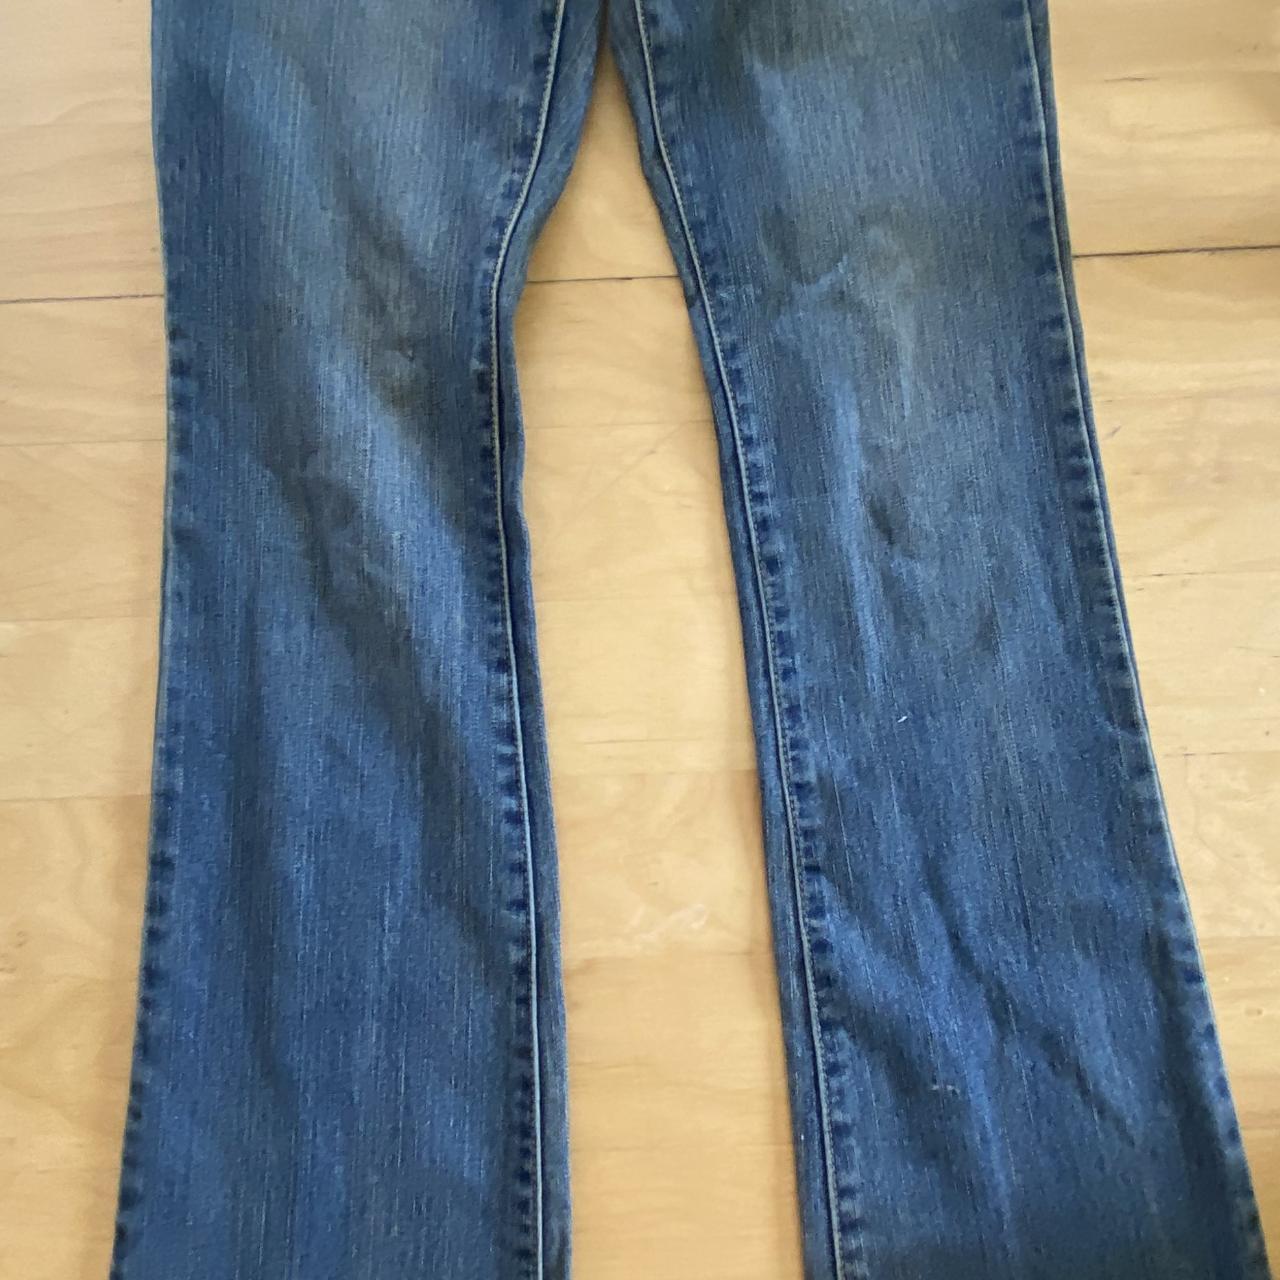 Wet Seal Jeans flared legs skinny jeans - Depop